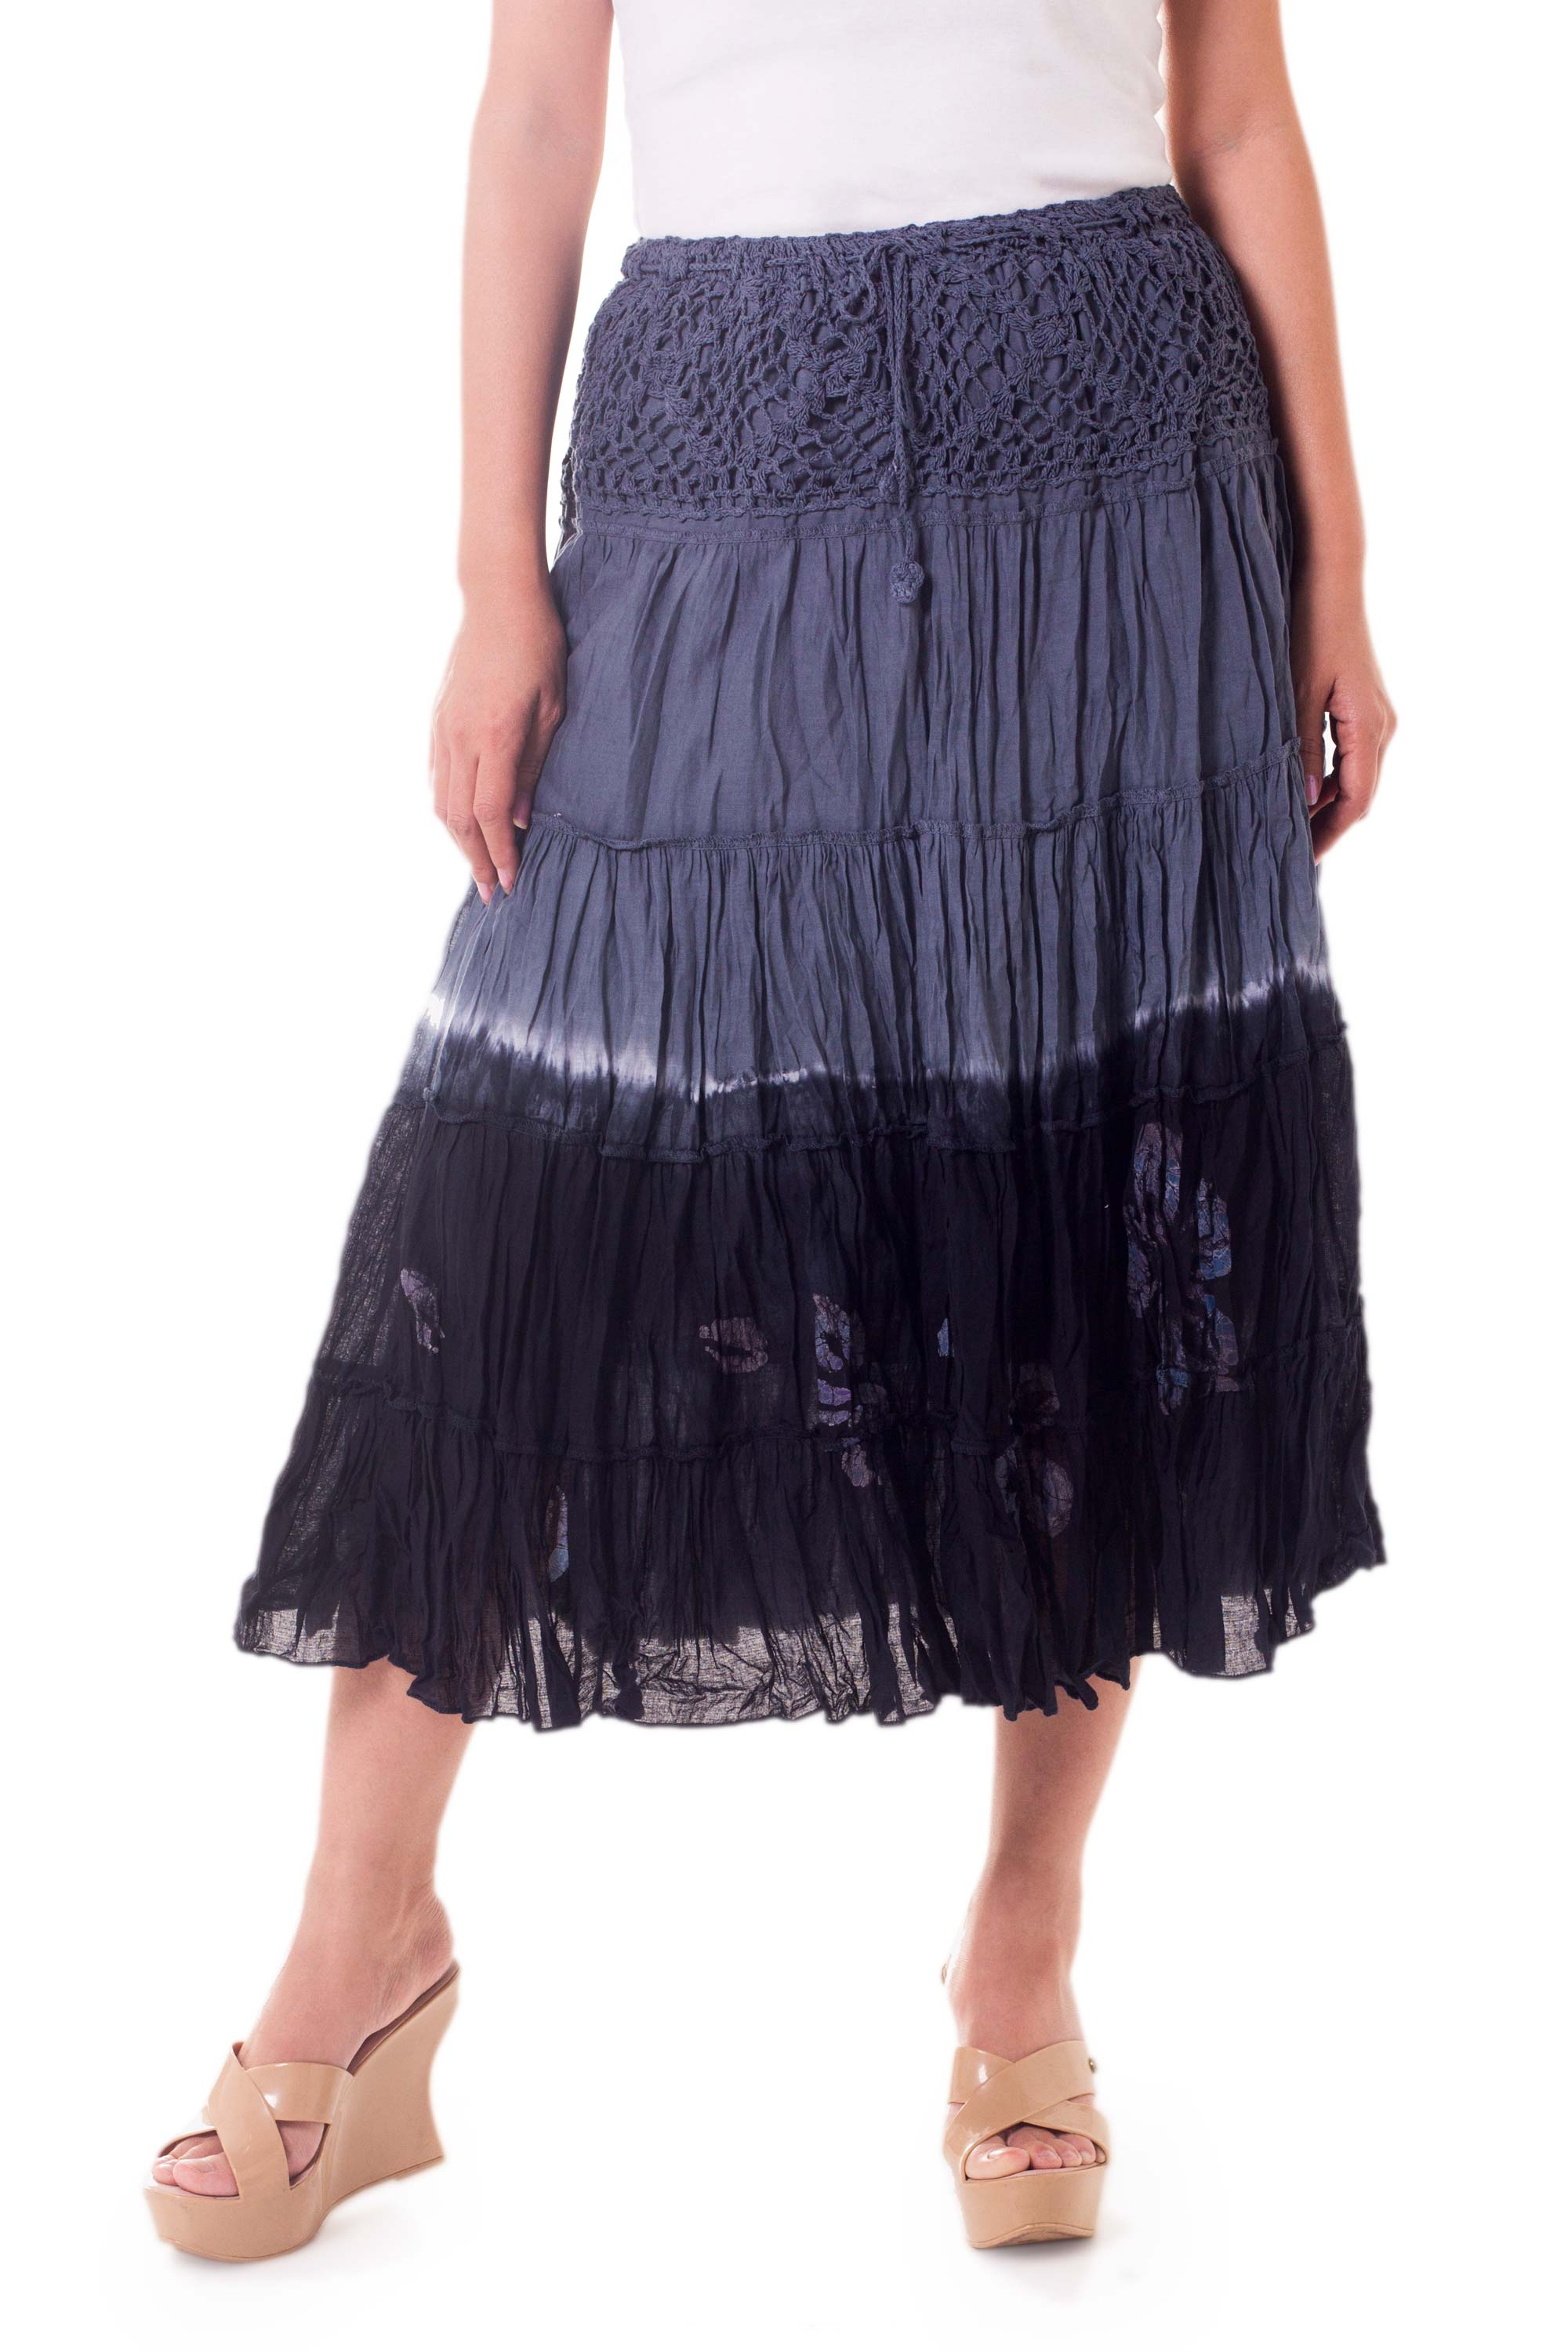 Long Cotton Batik and Crochet Skirt from Thailand - Grey Boho Chic | NOVICA